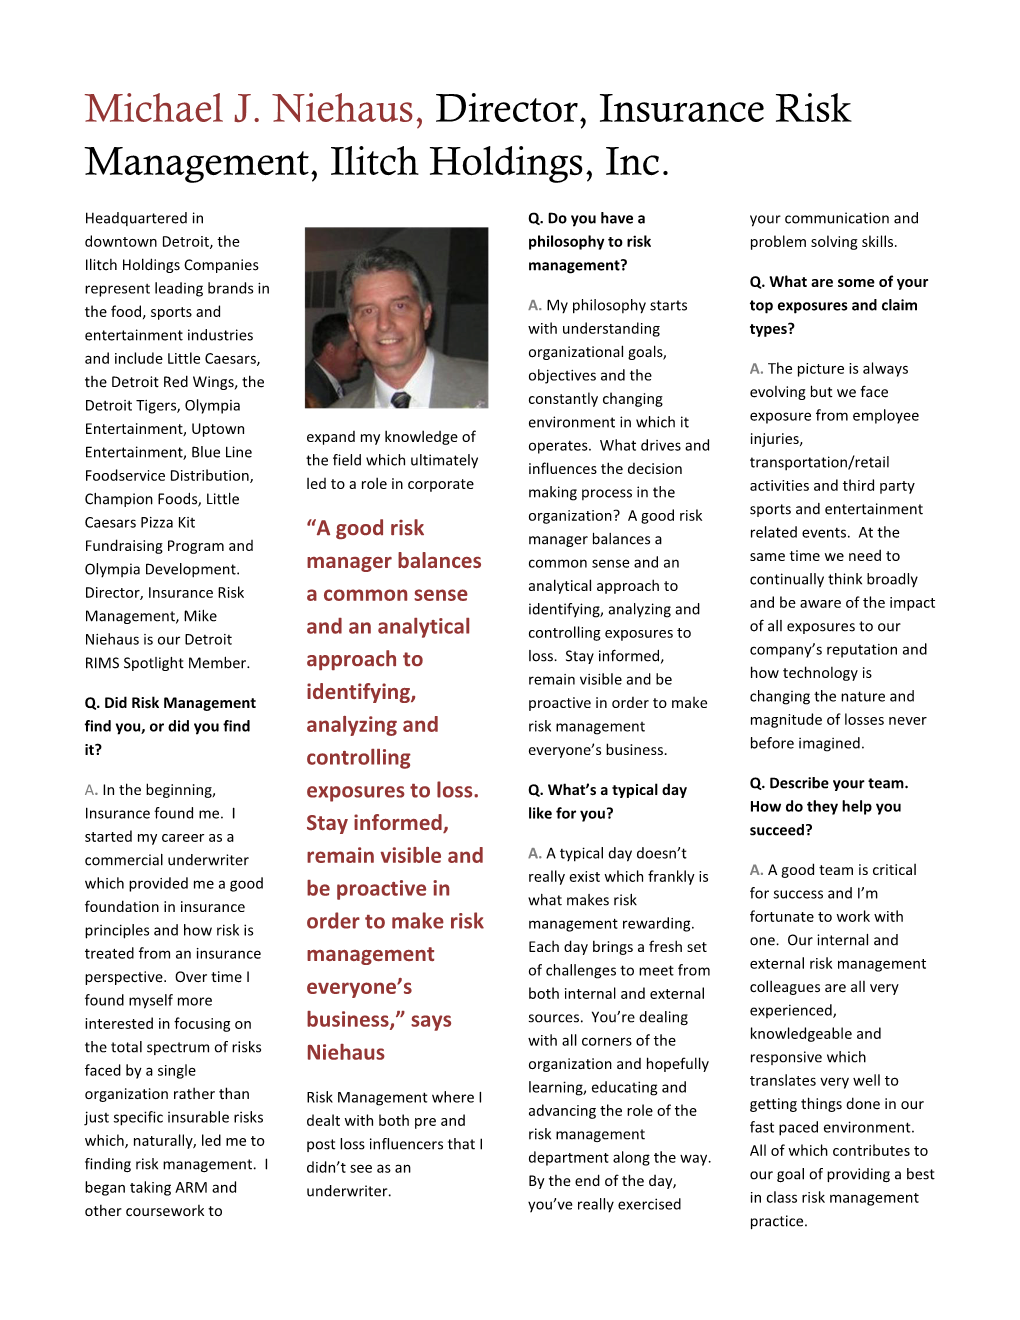 Michael J. Niehaus, Director, Insurance Risk Management, Ilitch Holdings, Inc